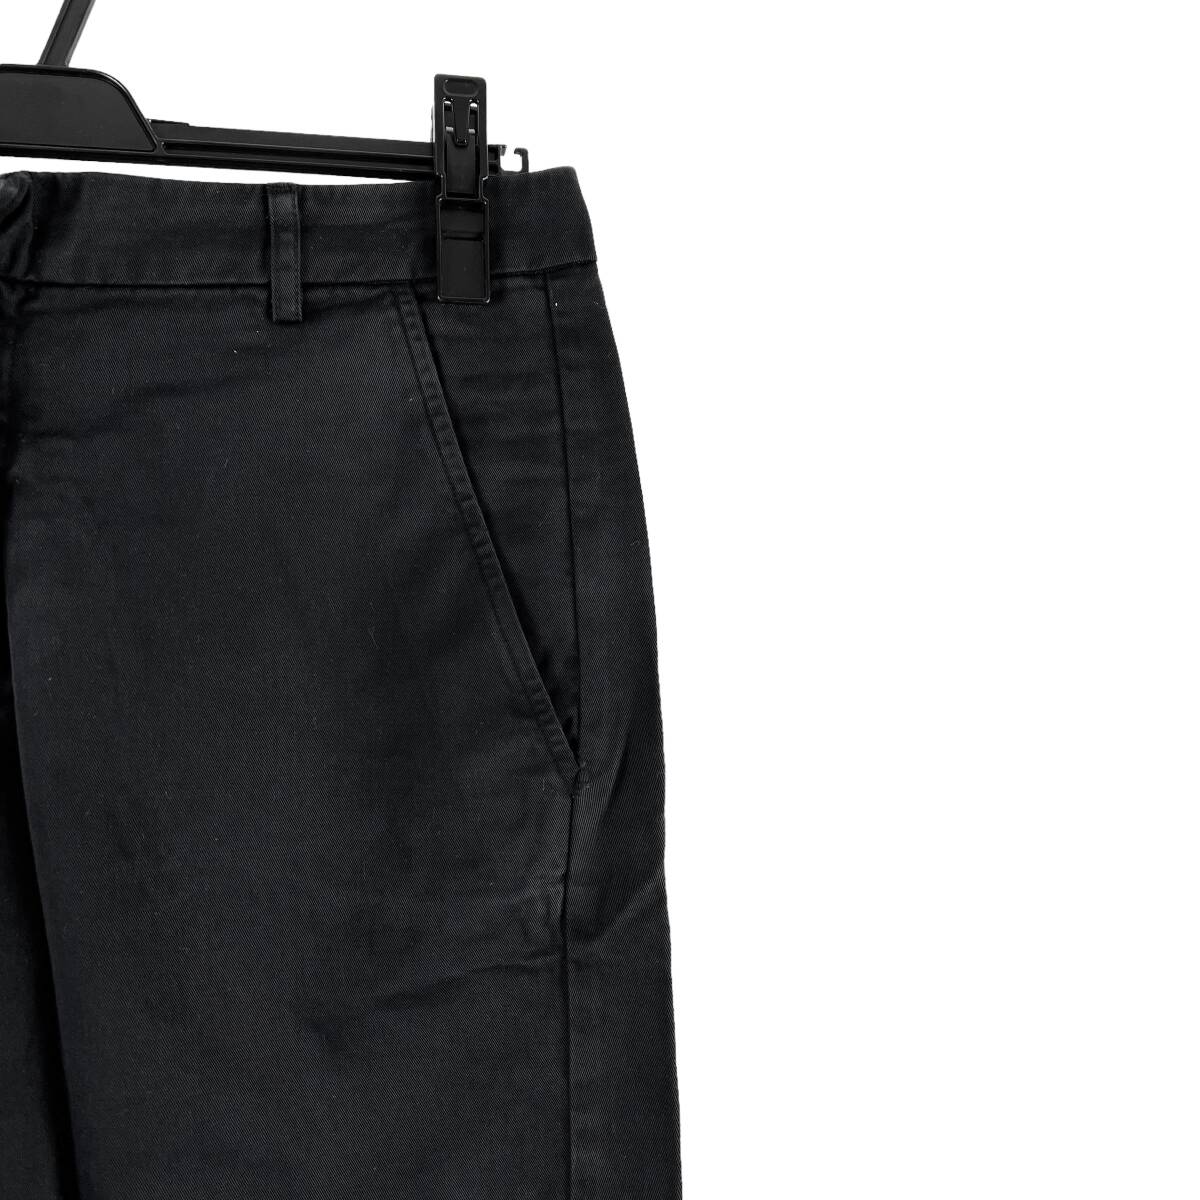 BAND OF OUTSIDERS(バンドオフアウトサイダー) Cotton Short Pants (black) 2